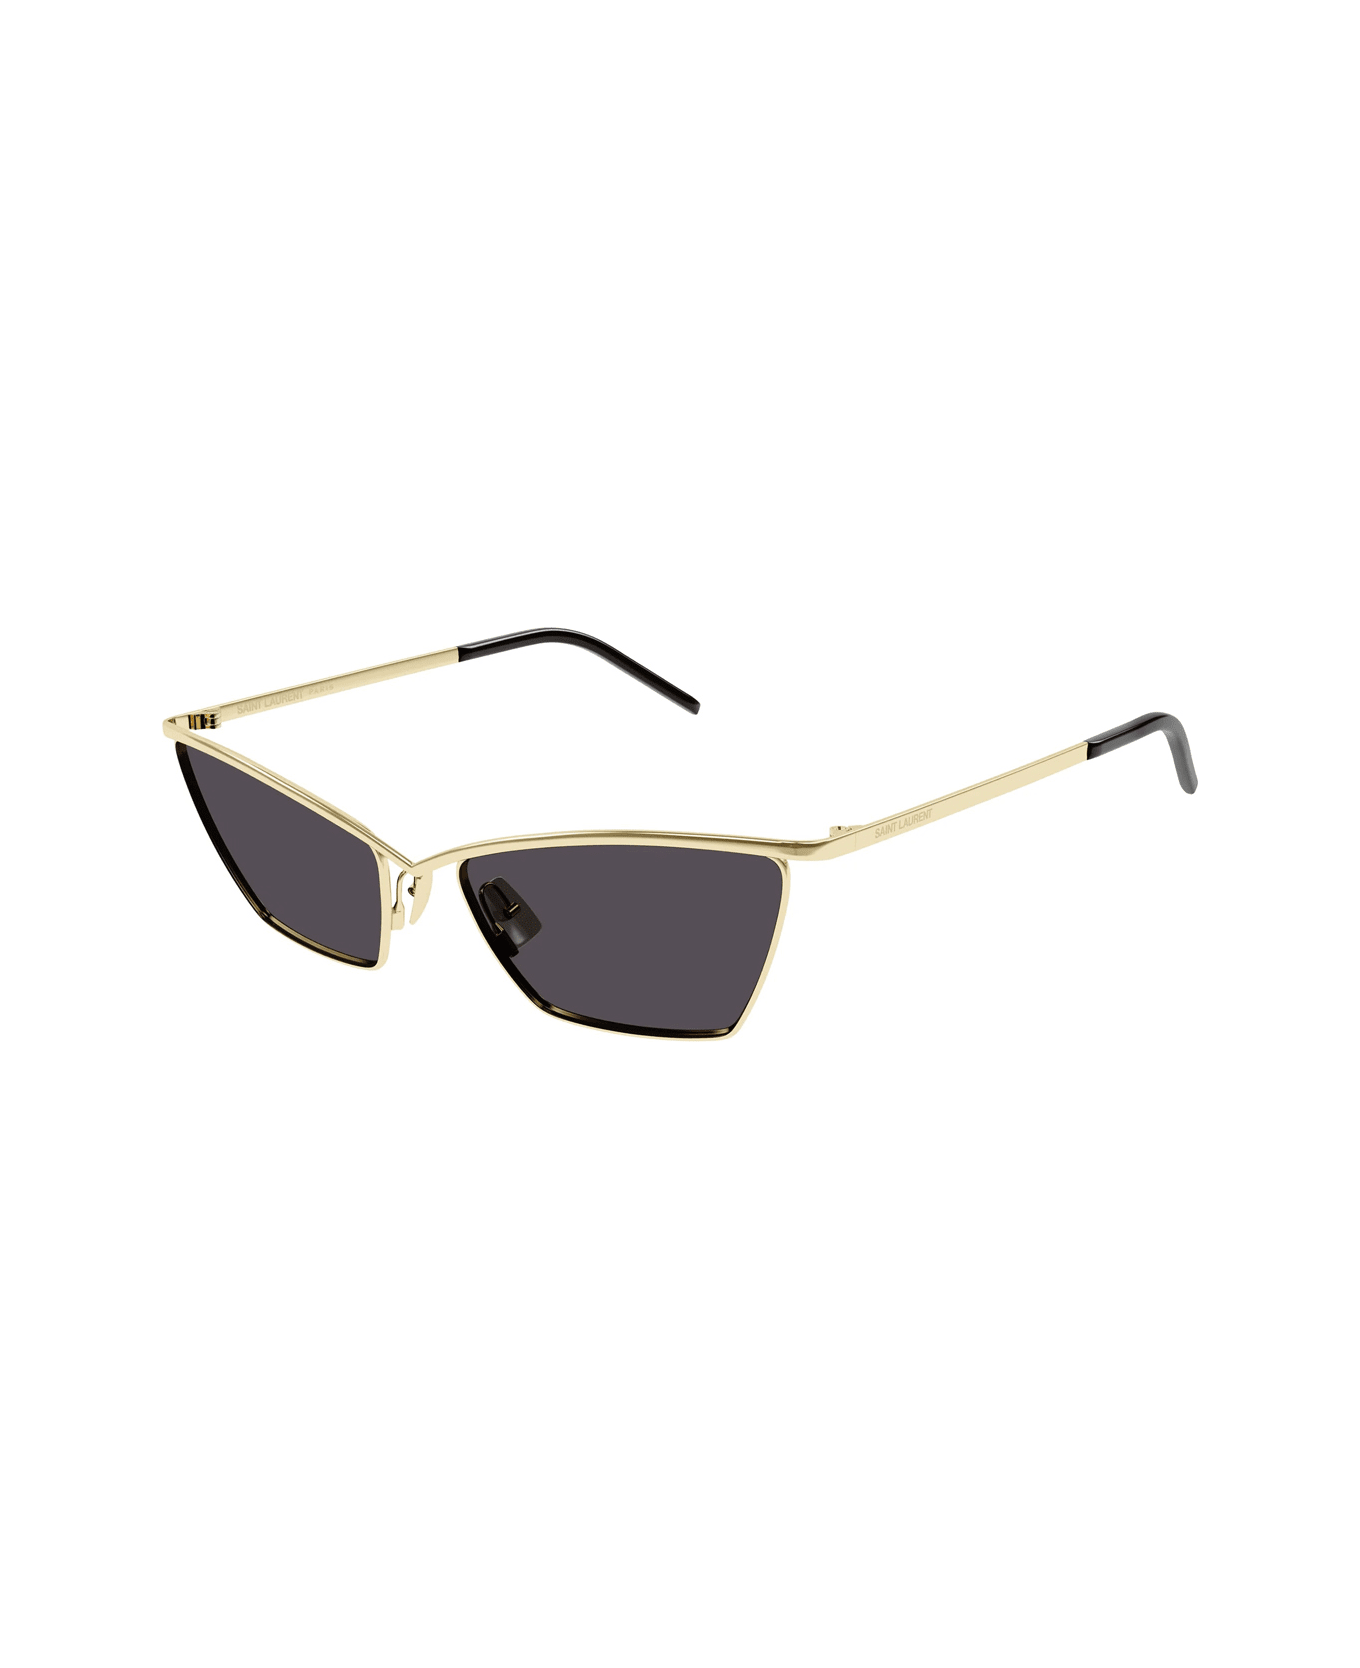 Saint Laurent Eyewear Sl 637 003 Sunglasses - Oro